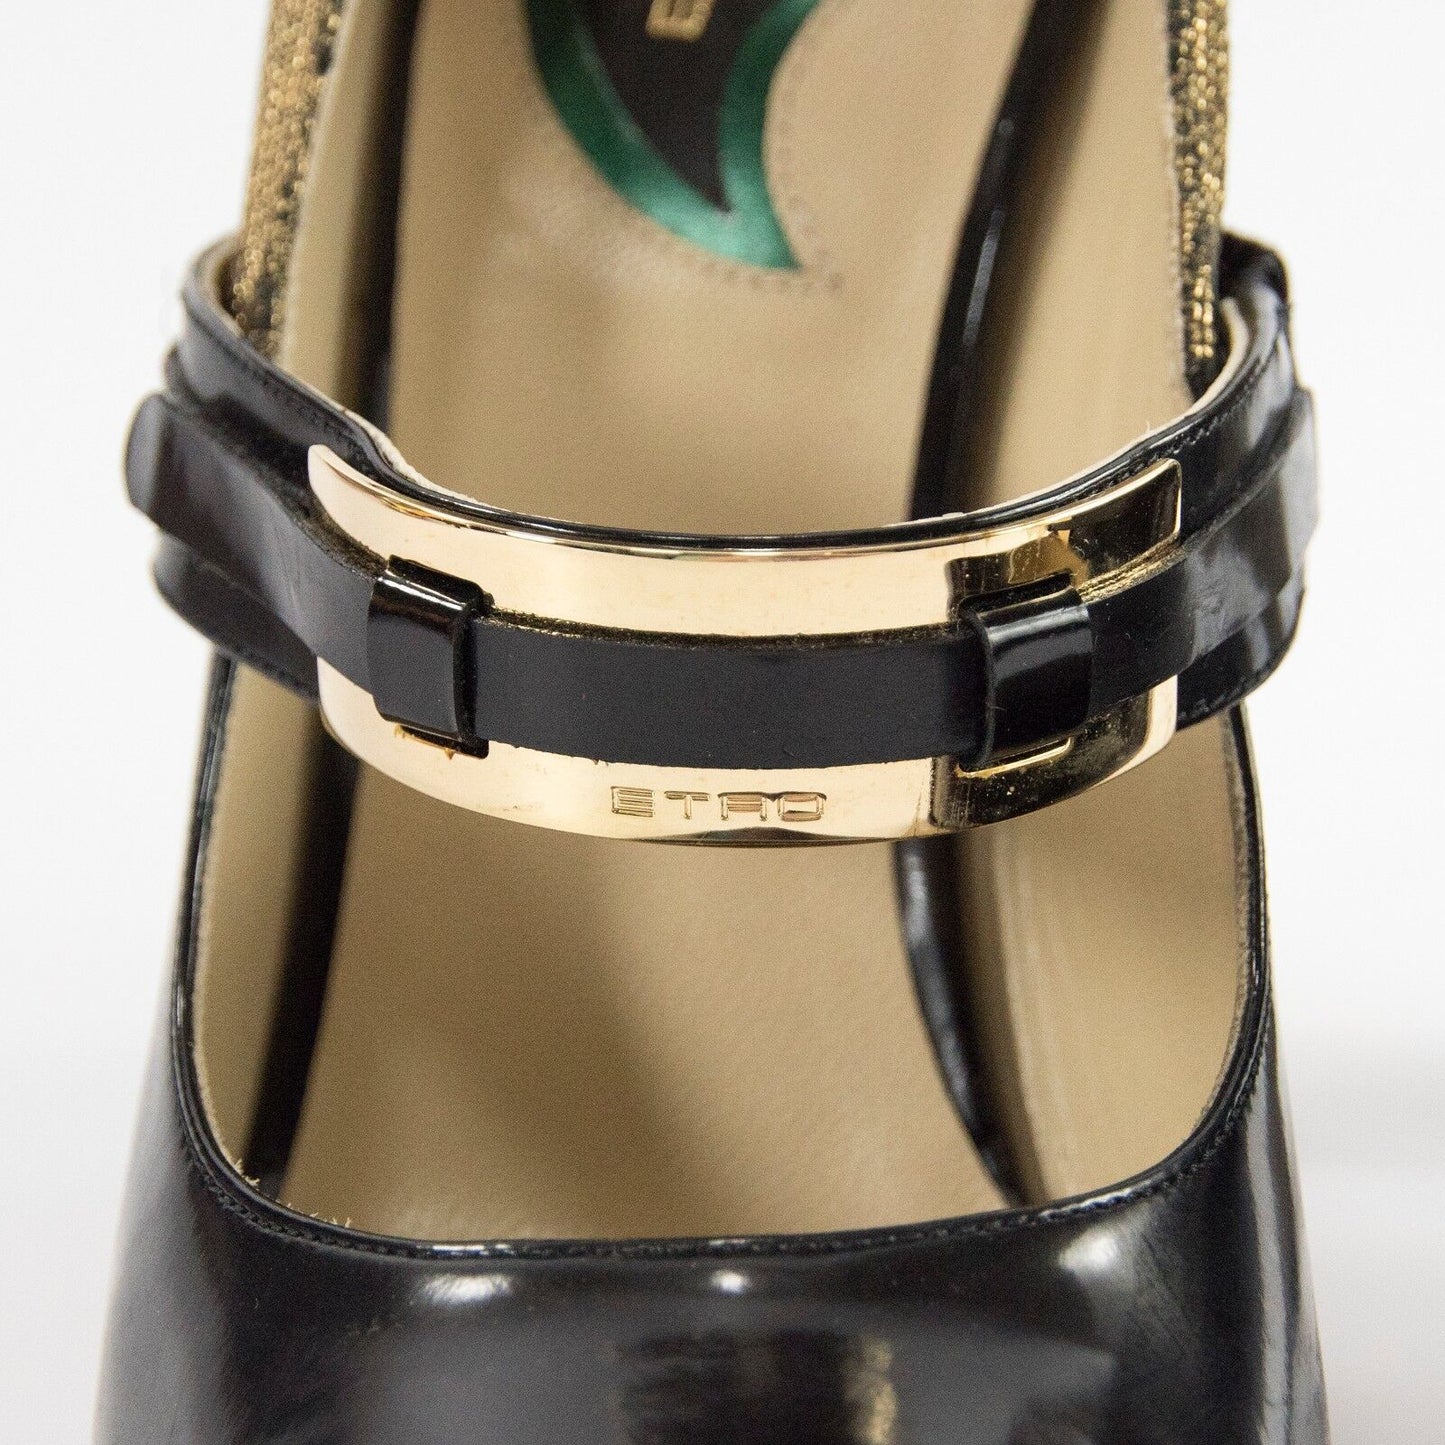 Etro RUNWAY Gold Metallic Black Leather Mary Jane Pointed Toe High Heels 9 39